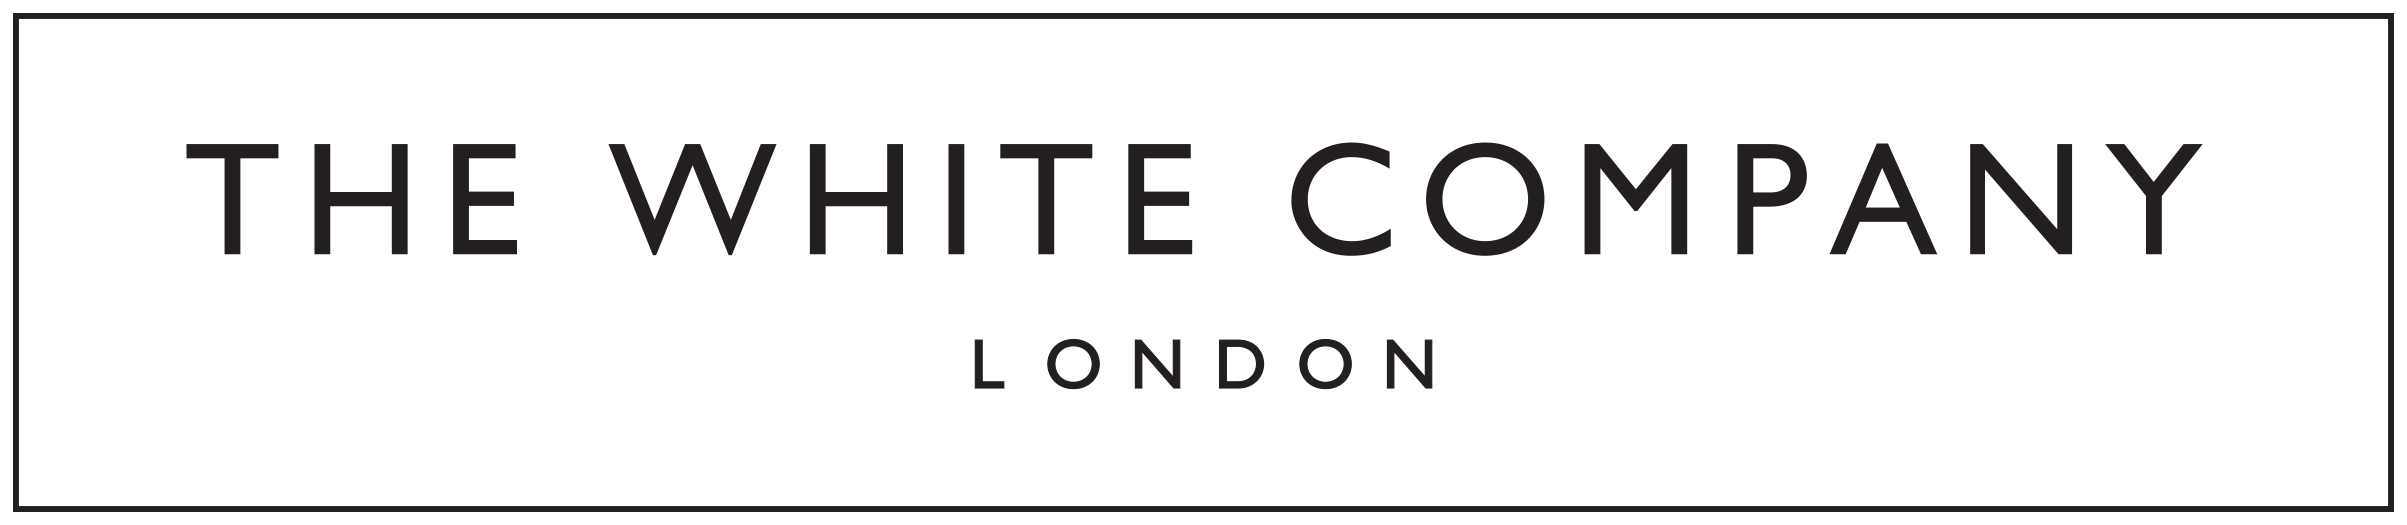 The White Company London logo